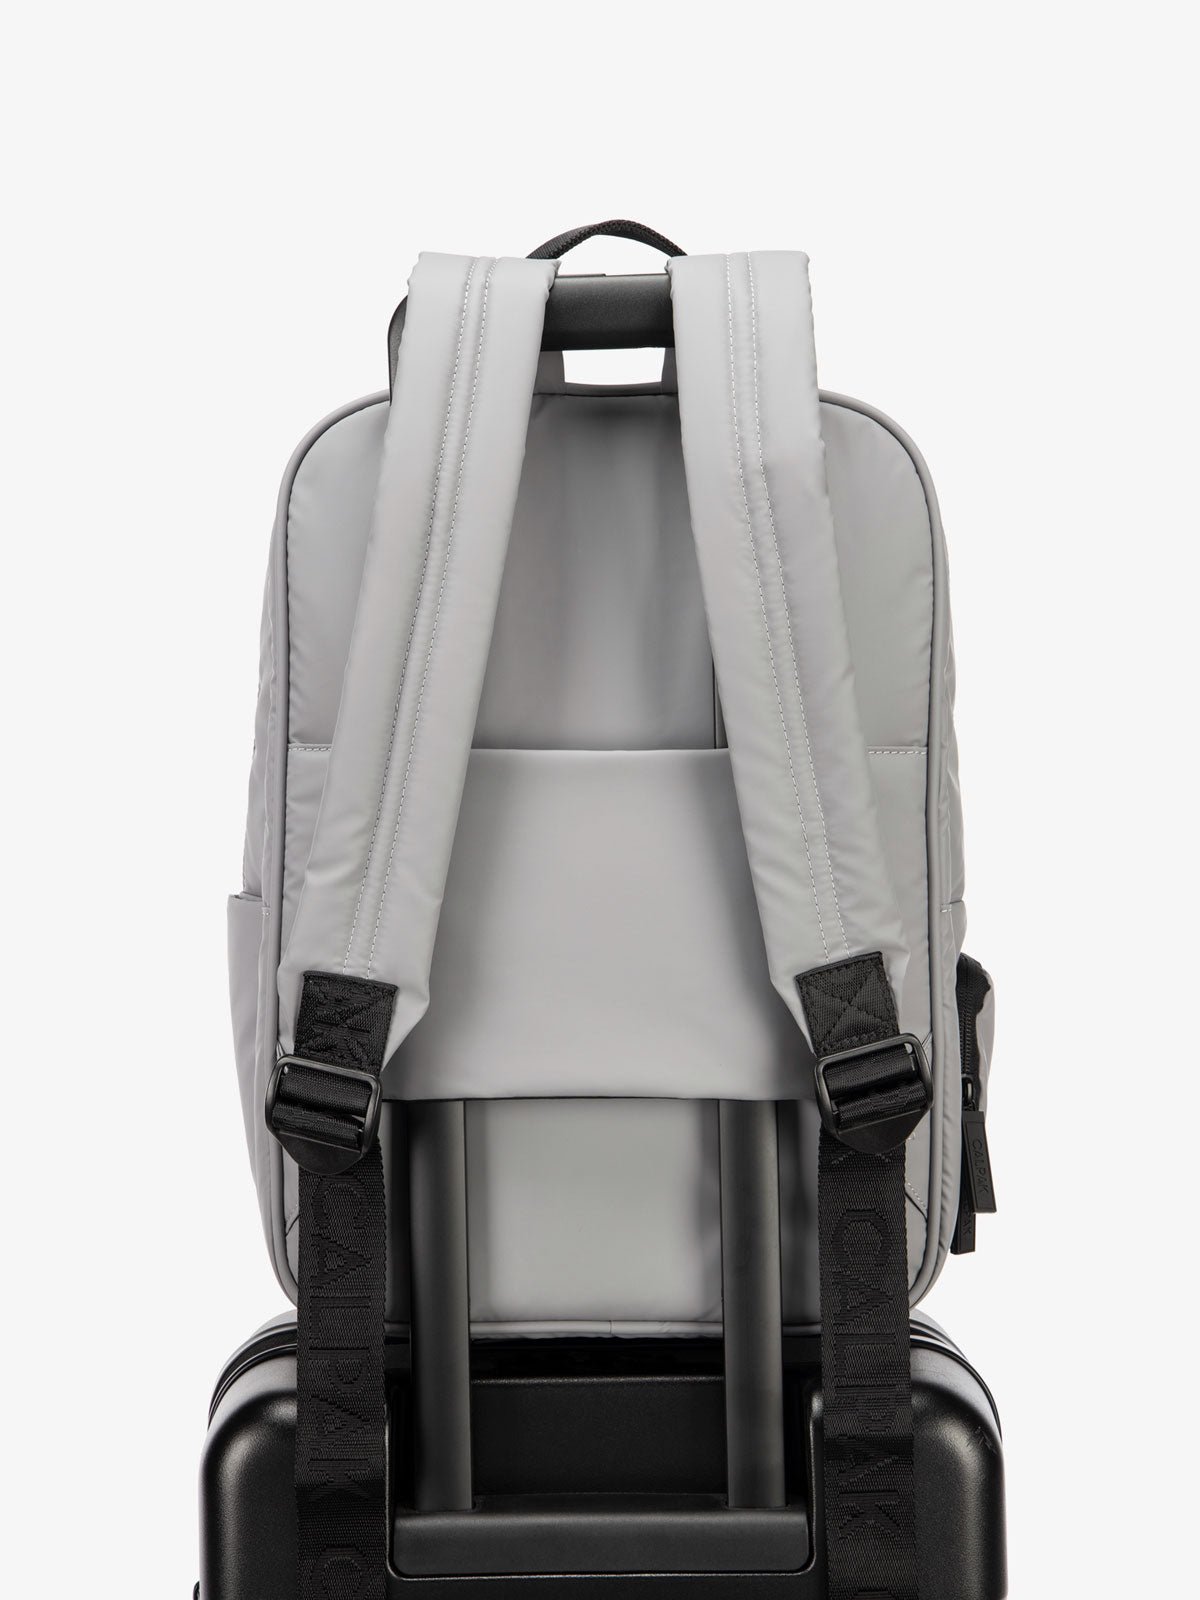 Backpack with luggage sleeve